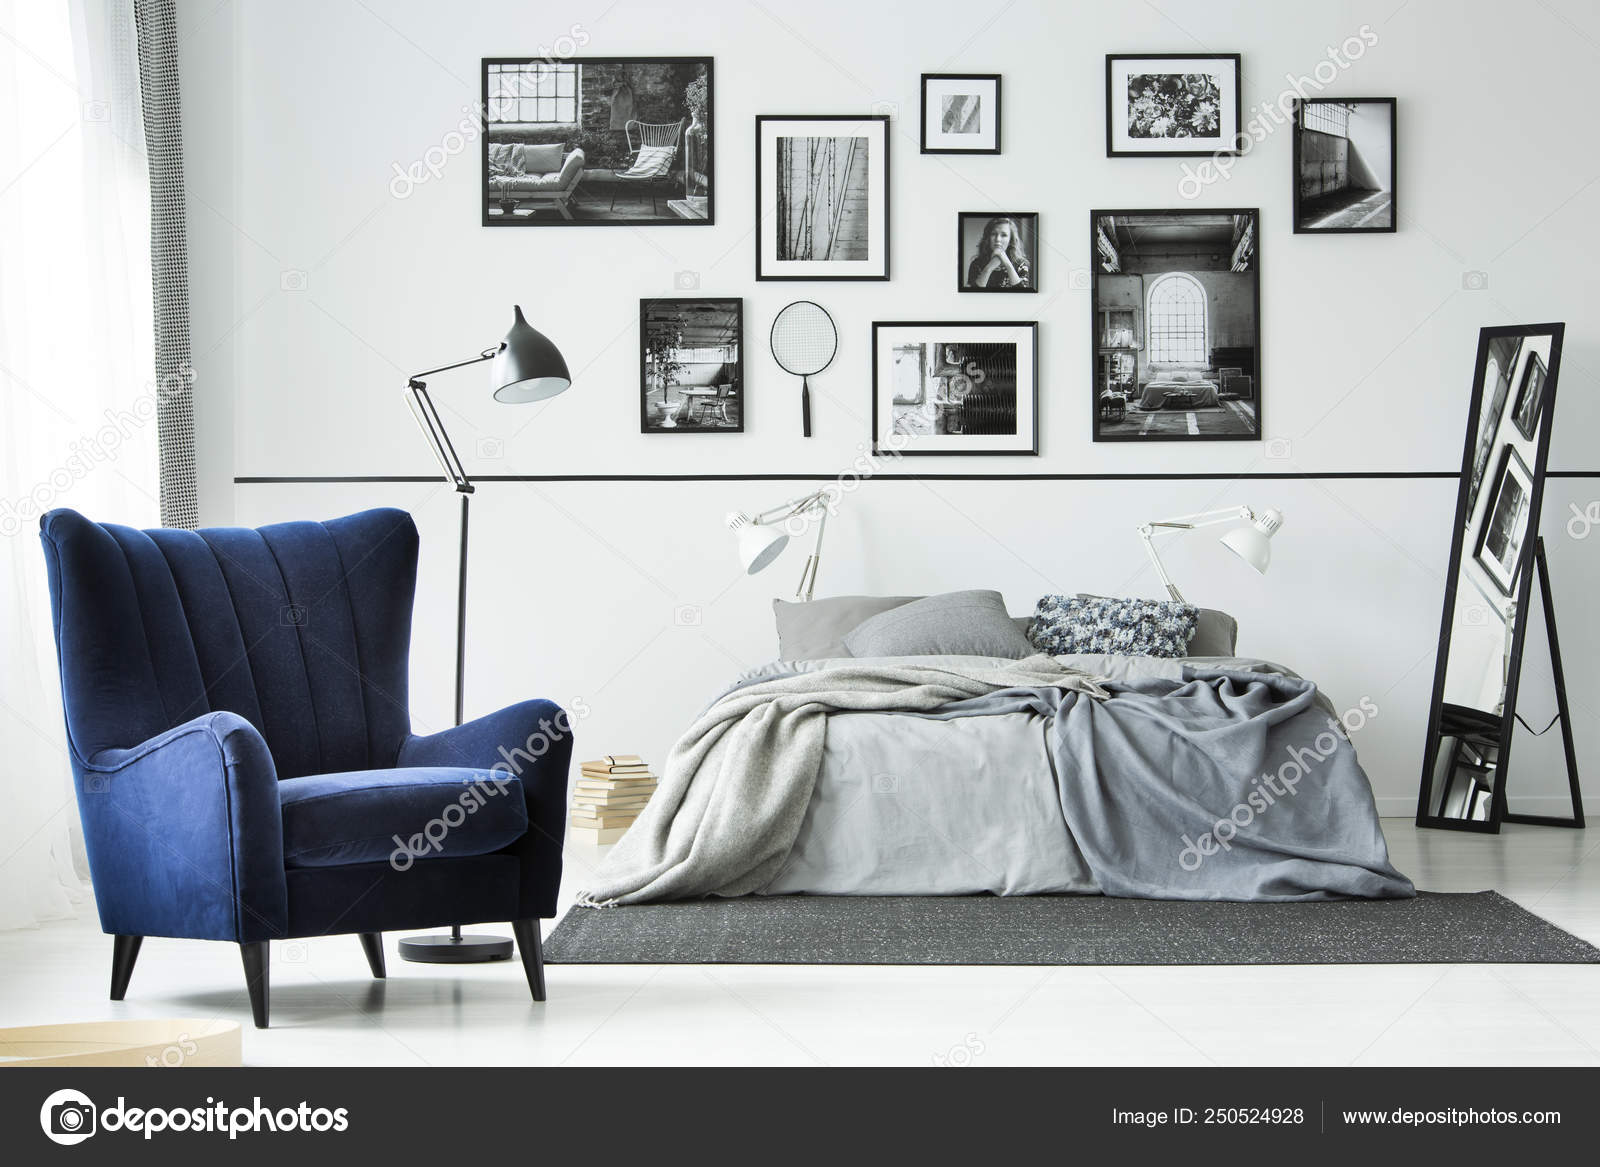 Comfortable Blue Armchair In Monochromatic Bedroom Interior